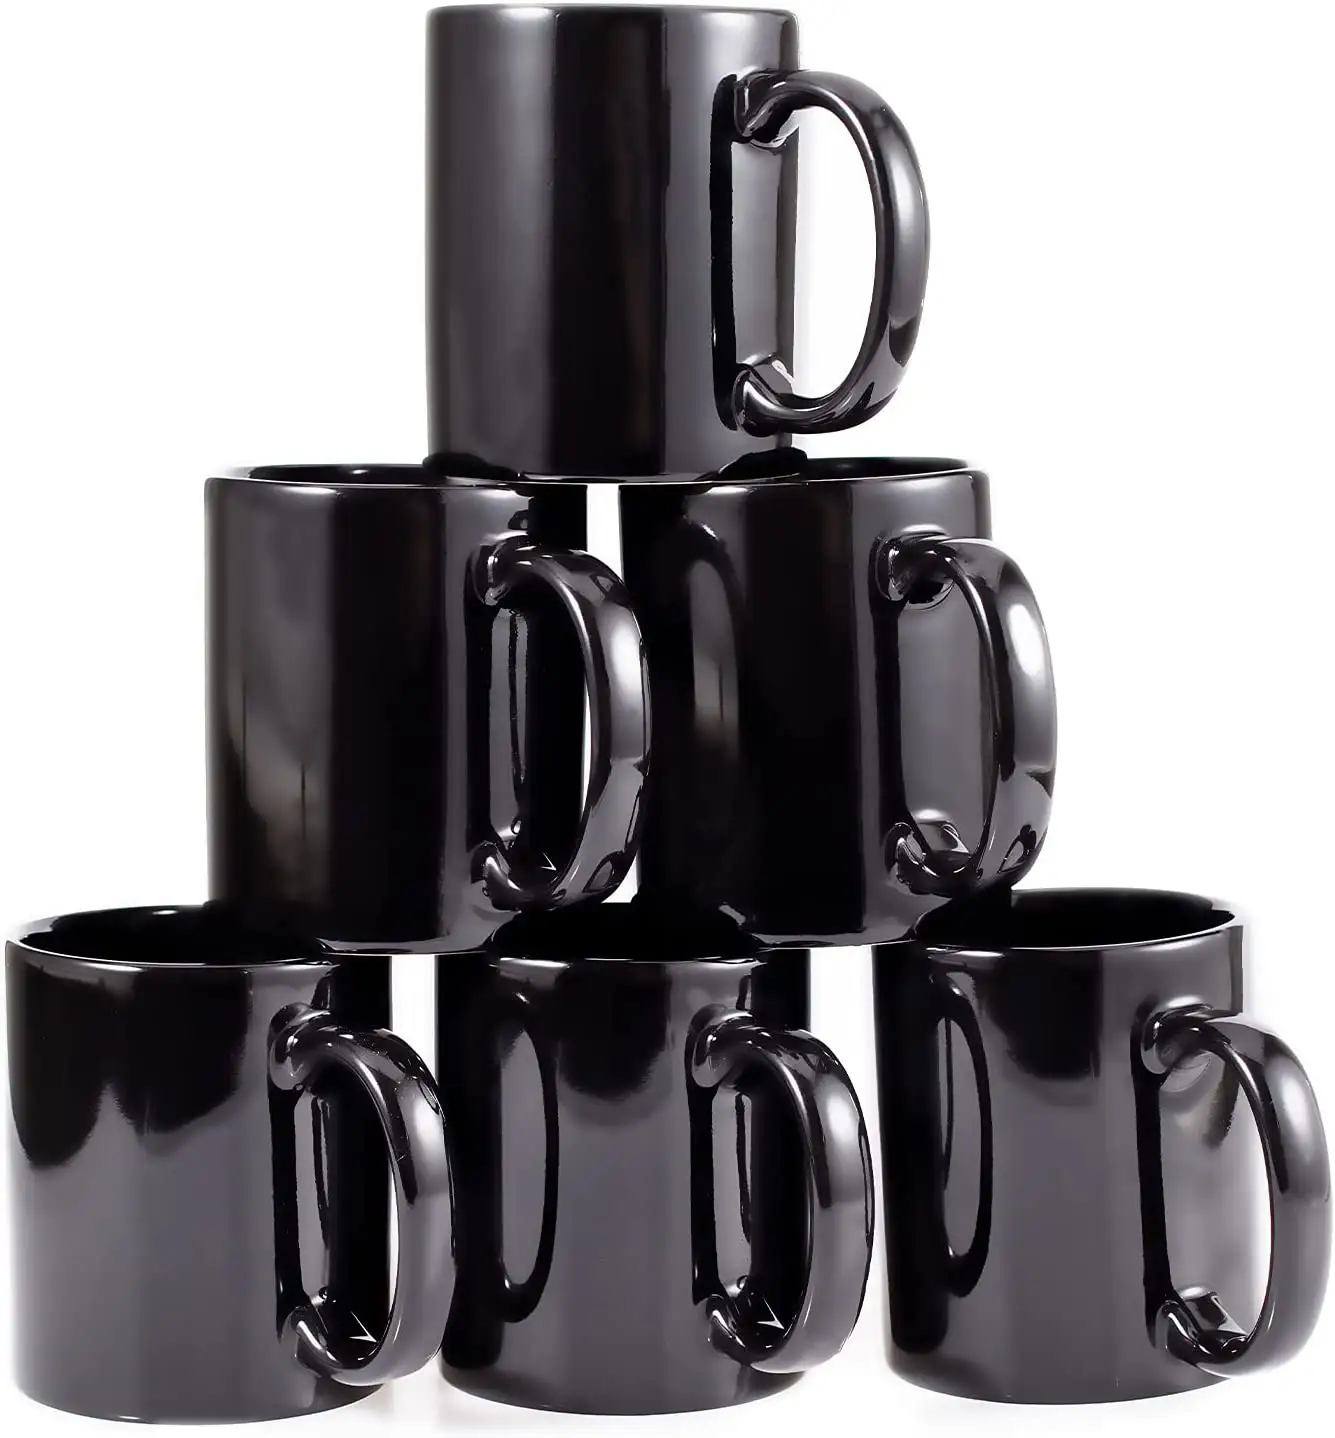 New promotional 330ml matte black ceramic coffee mug with customized logo